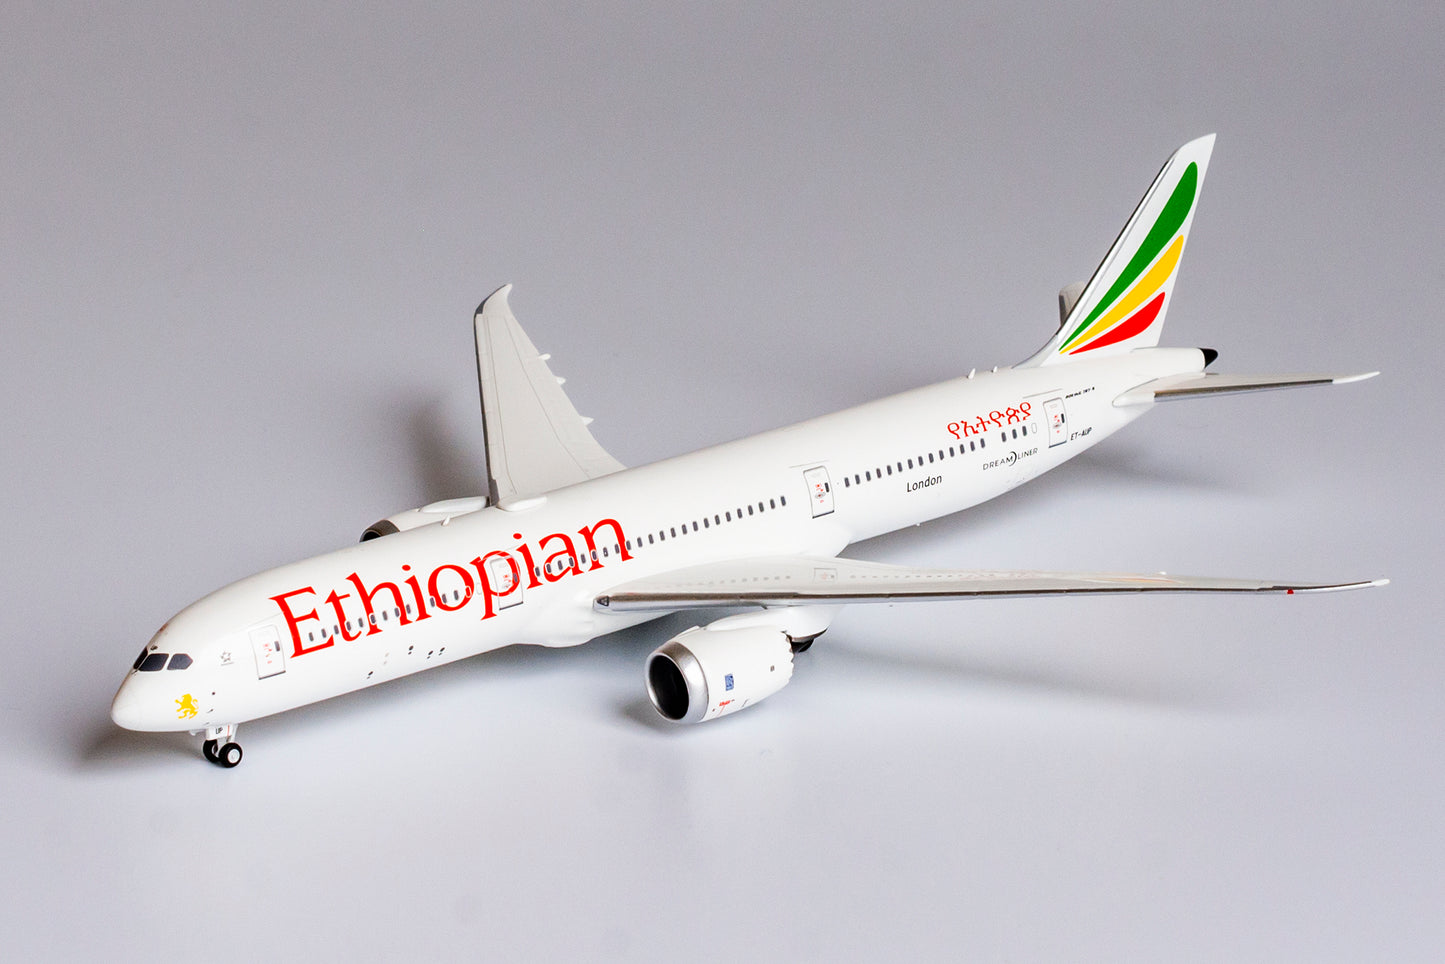 1:400 NG Models Ethiopian Airlines 787-9 "London" ET-AUP NG55063